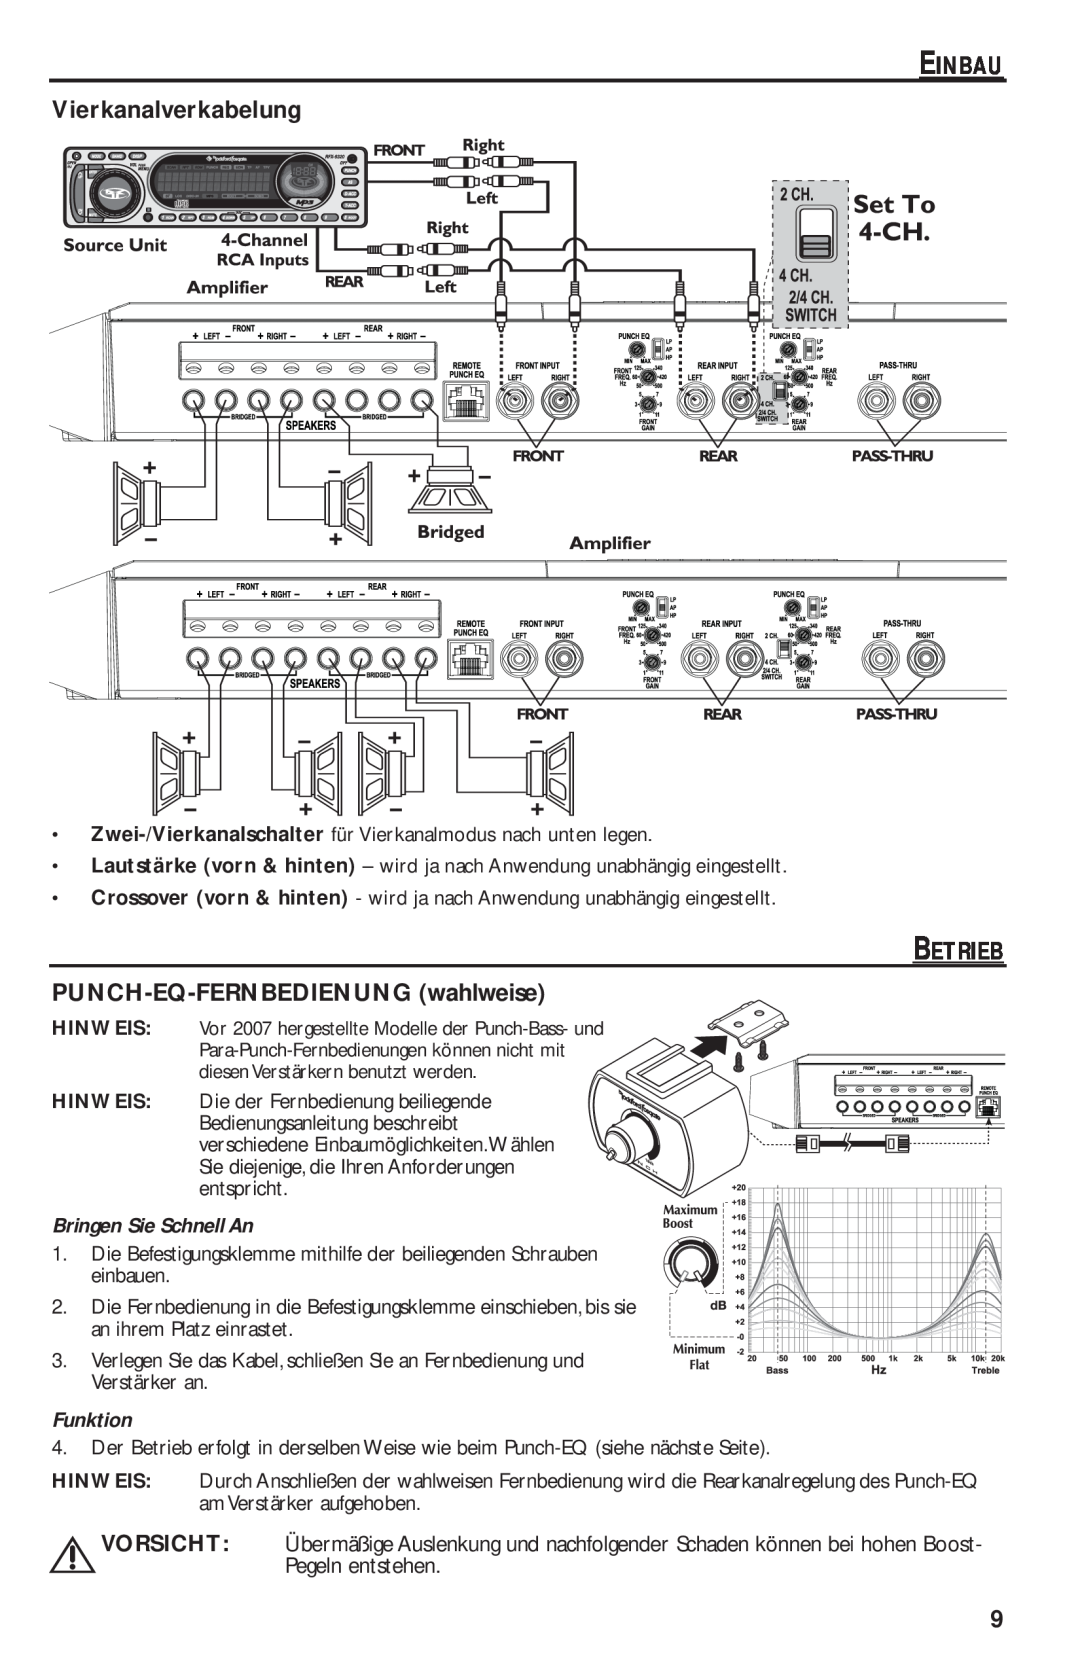 Rockford Fosgate T1000-4 manual EINBAU Vierkanalverkabelung, Betrieb, PUNCH-EQ-FERNBEDIENUNGwahlweise, Funktion 